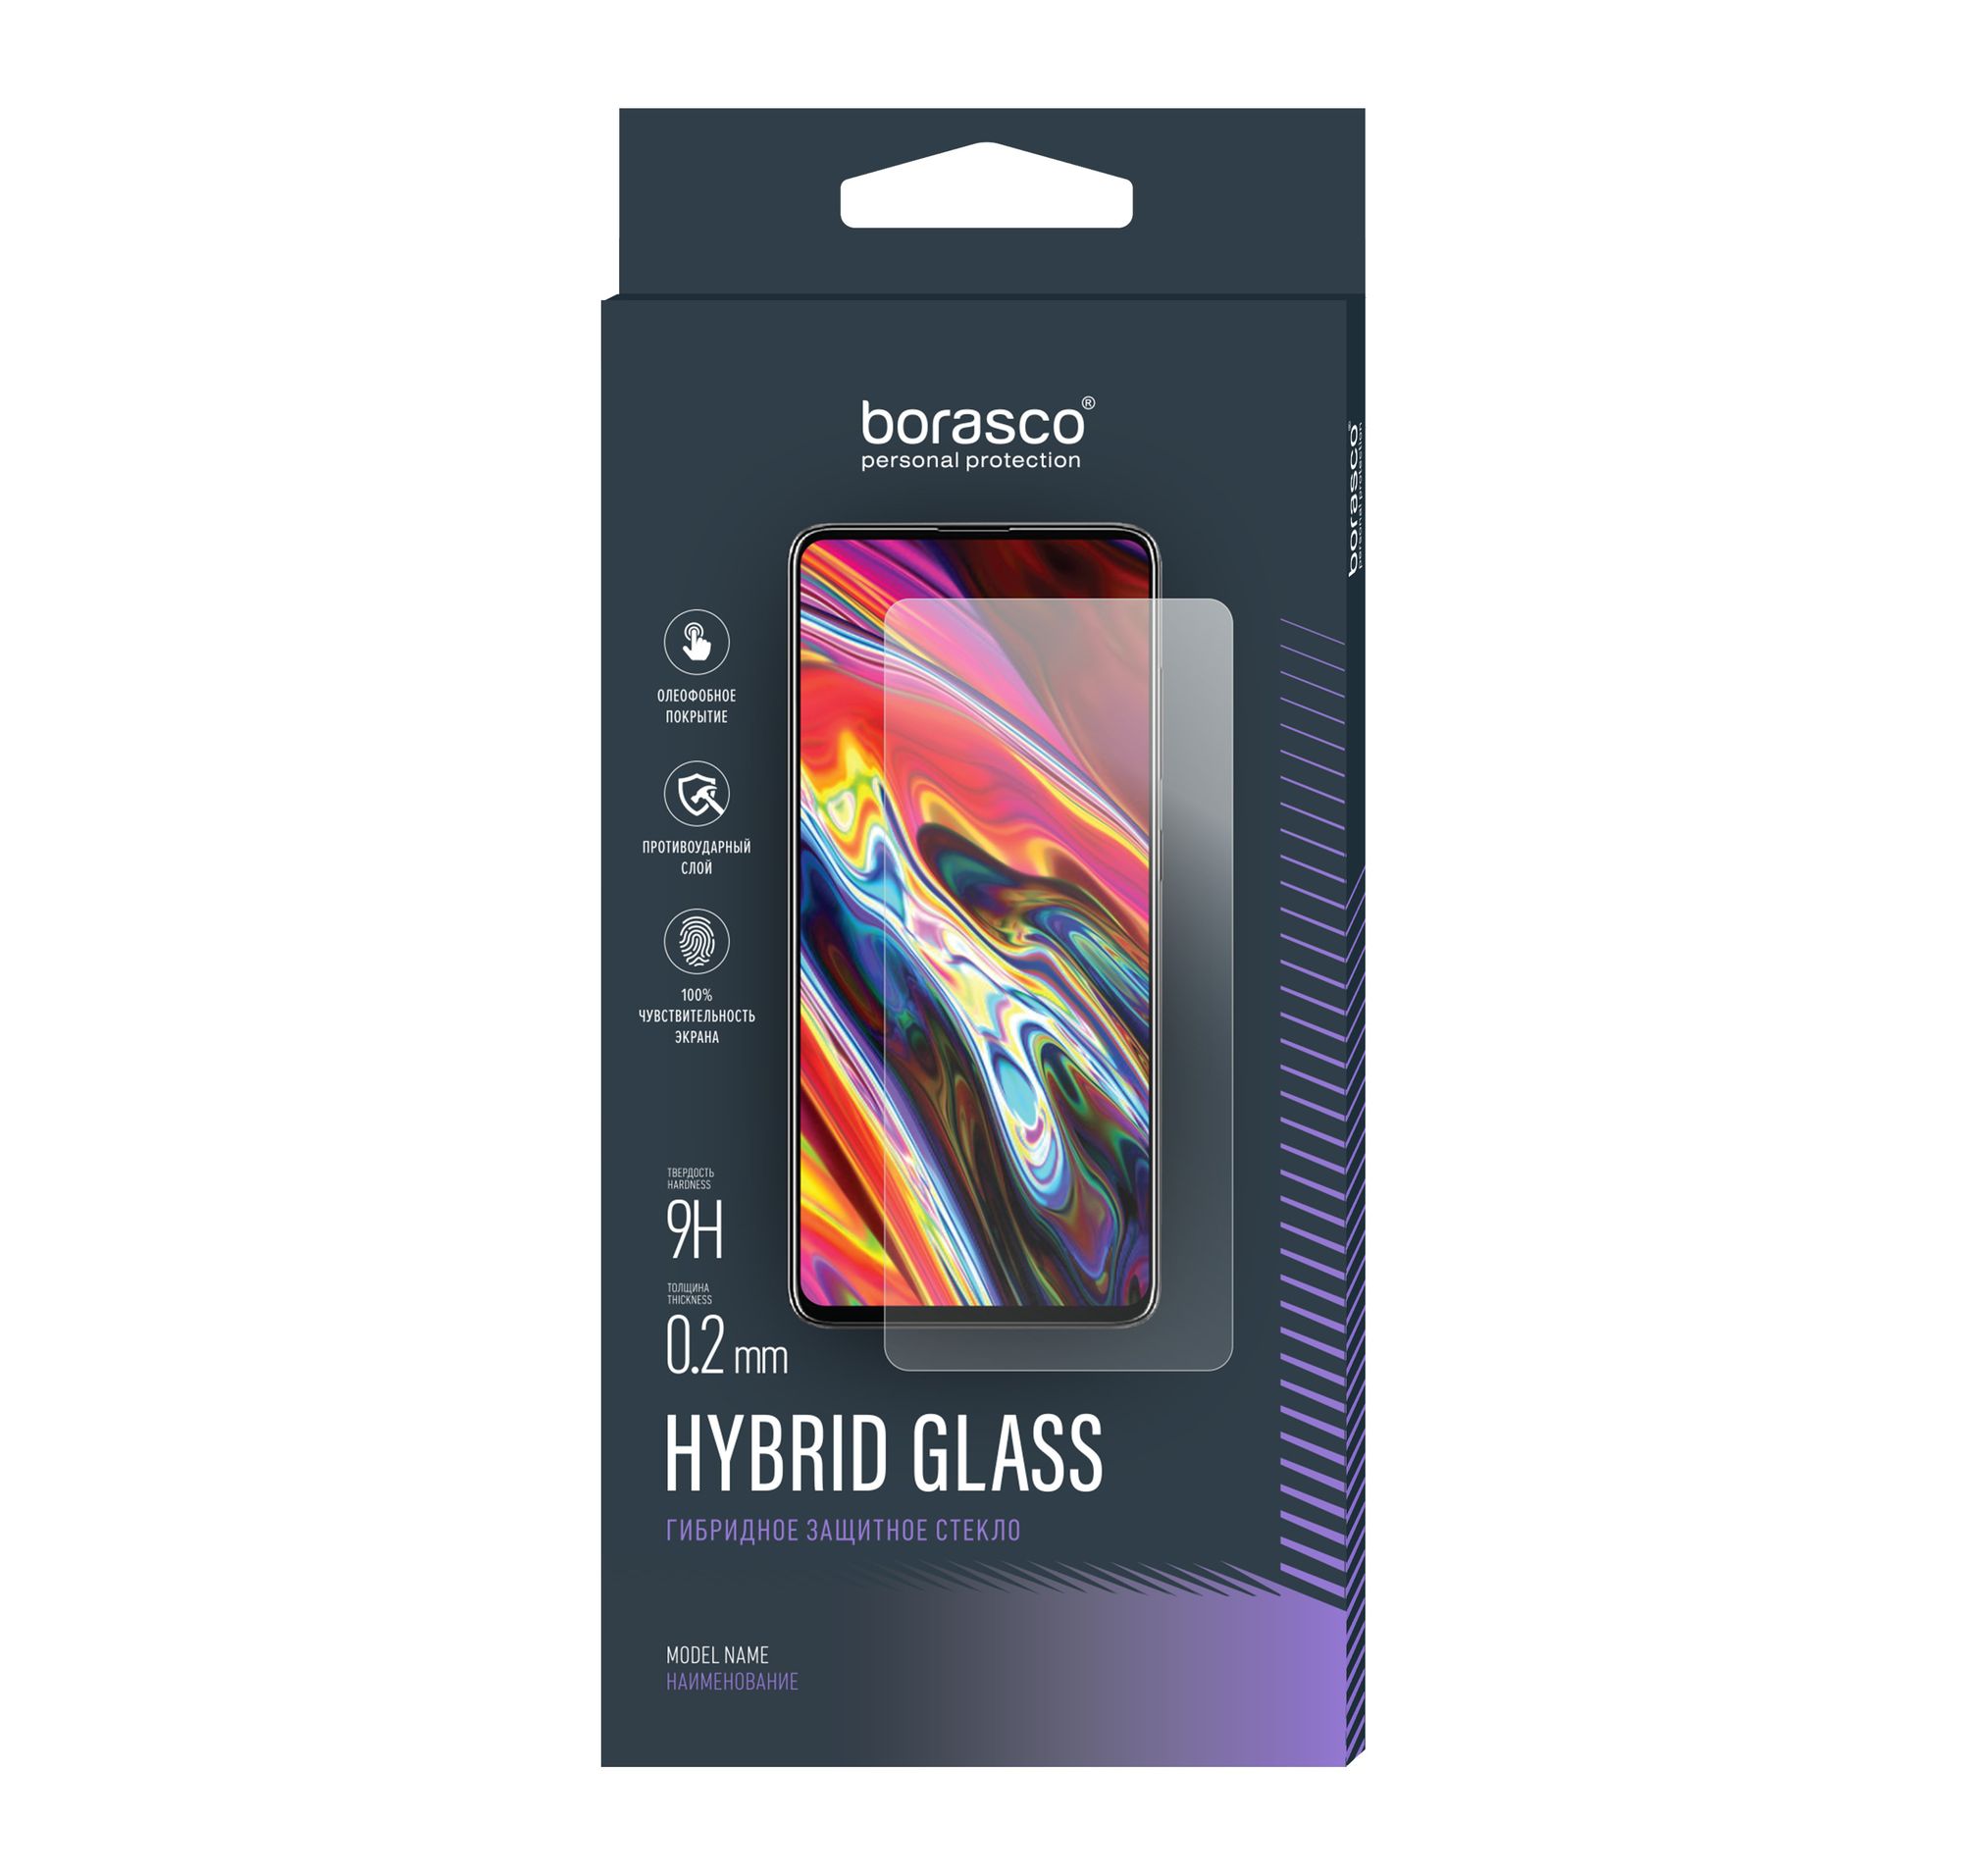 Стекло защитное Hybrid Glass VSP 0,26 мм для Huawei P9 Lite противоударное защитное стекло 2 5d для huawei p9 lite хуавей п9 лайт без рамки прозрачное на плоскую часть экрана